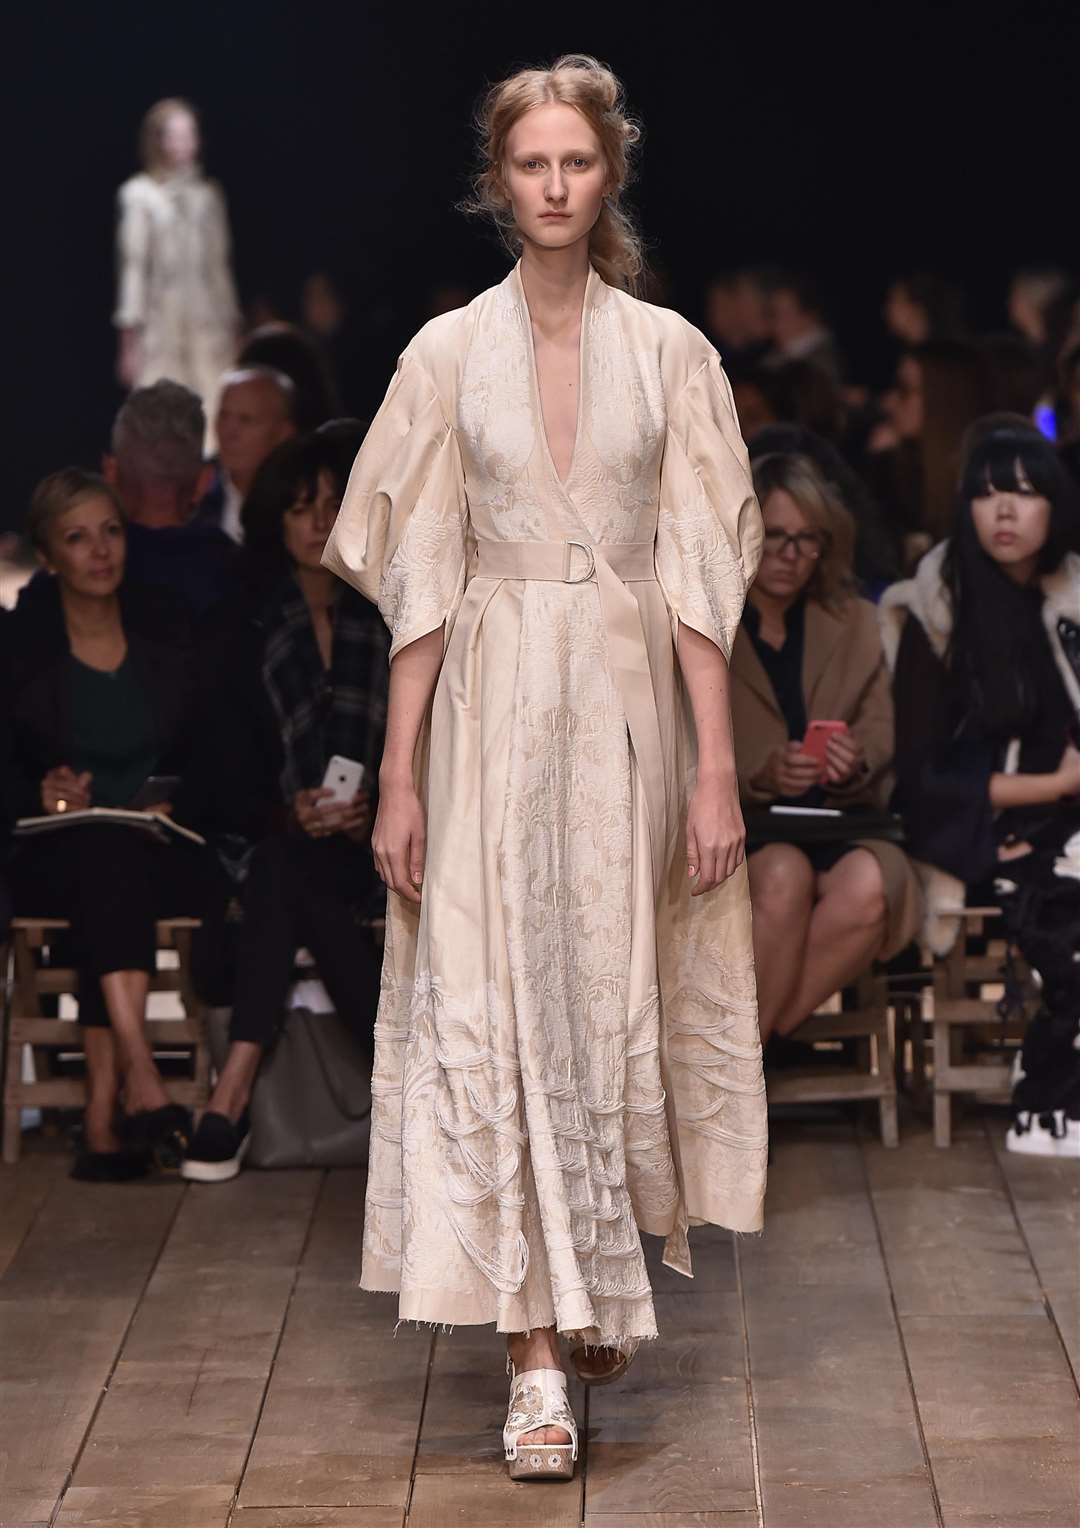 Royal designer Sarah Burton for Alexander McQueen has been inspired by Huguenot weavers